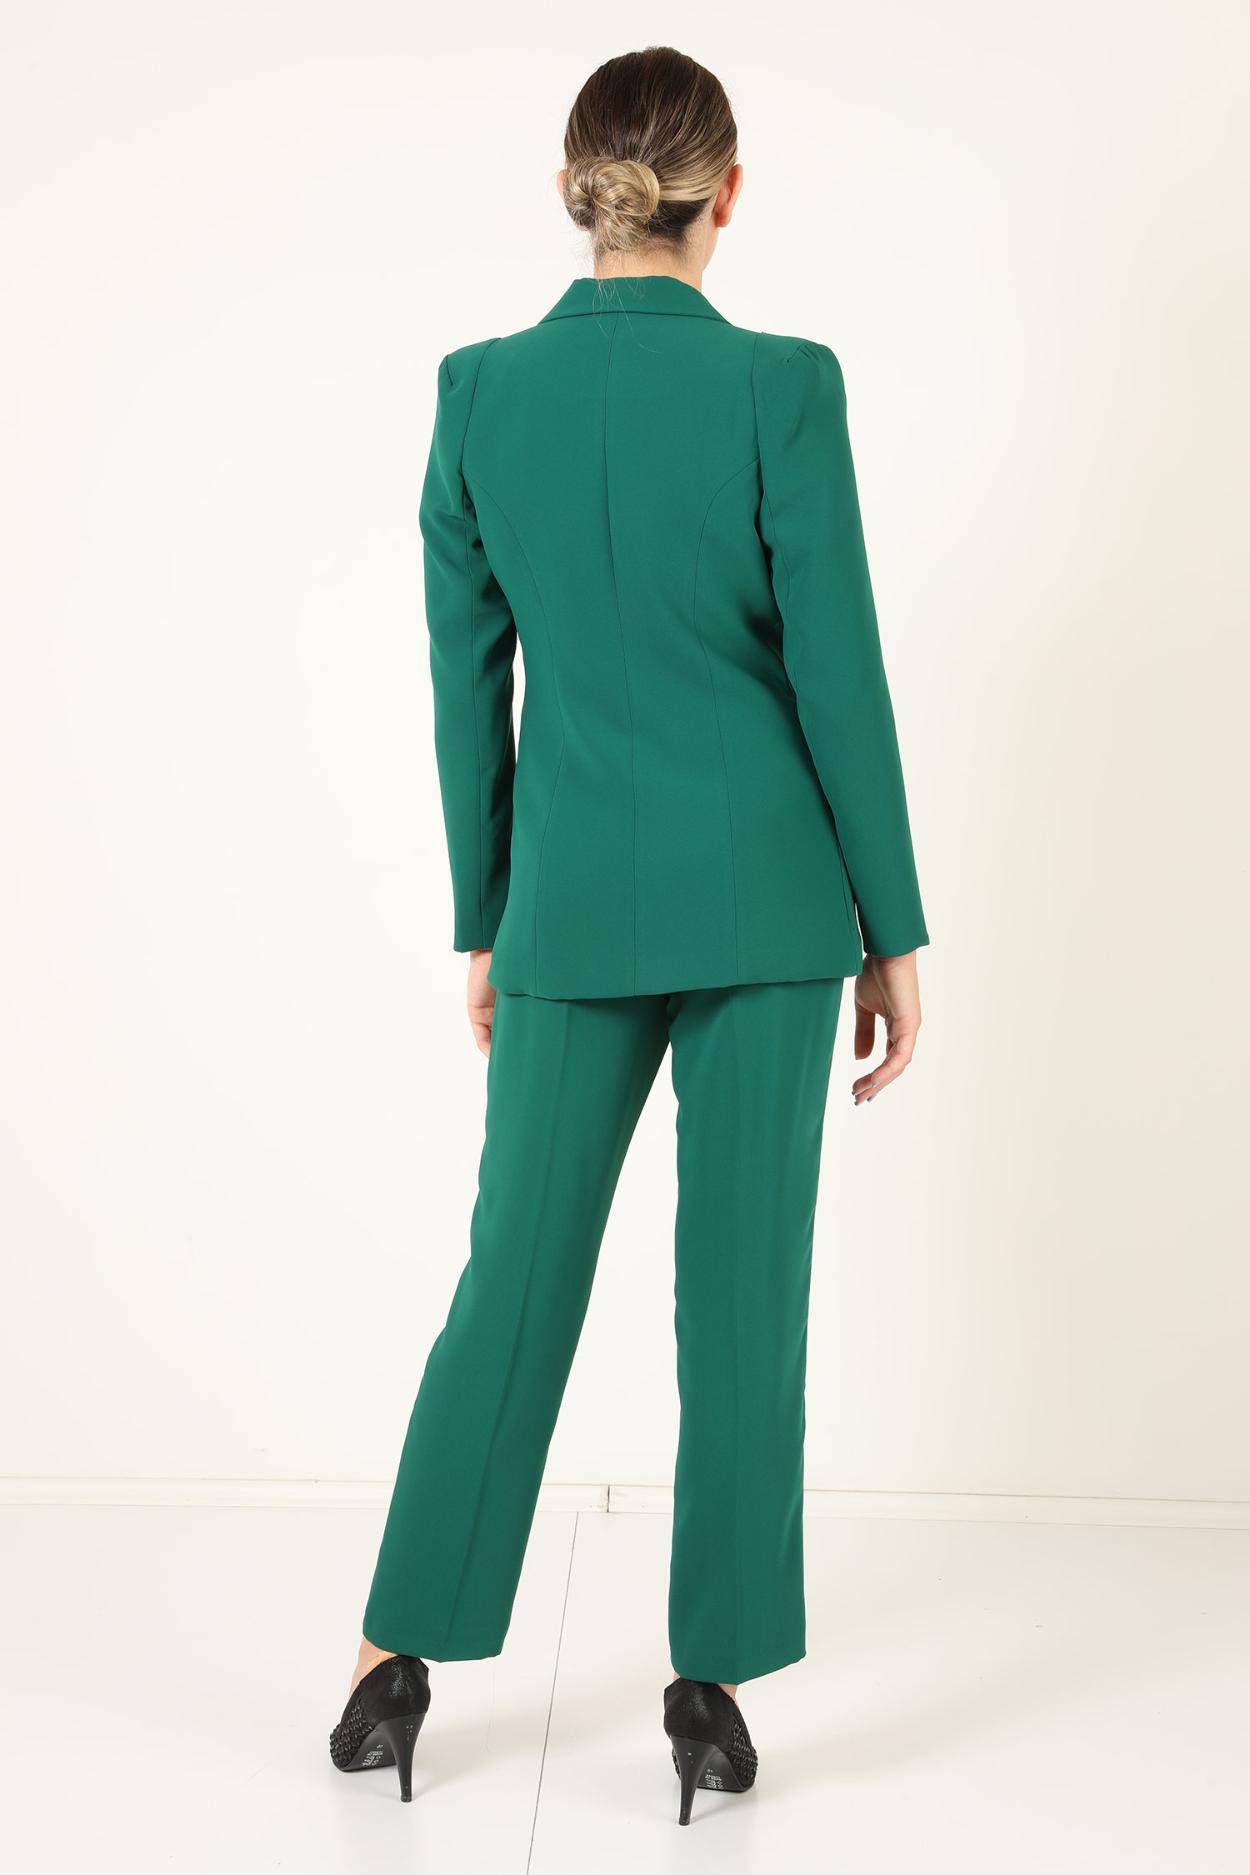 Qne Tu Night Wear Suits|Fimkastore.com: Online Shopping Wholesale ...